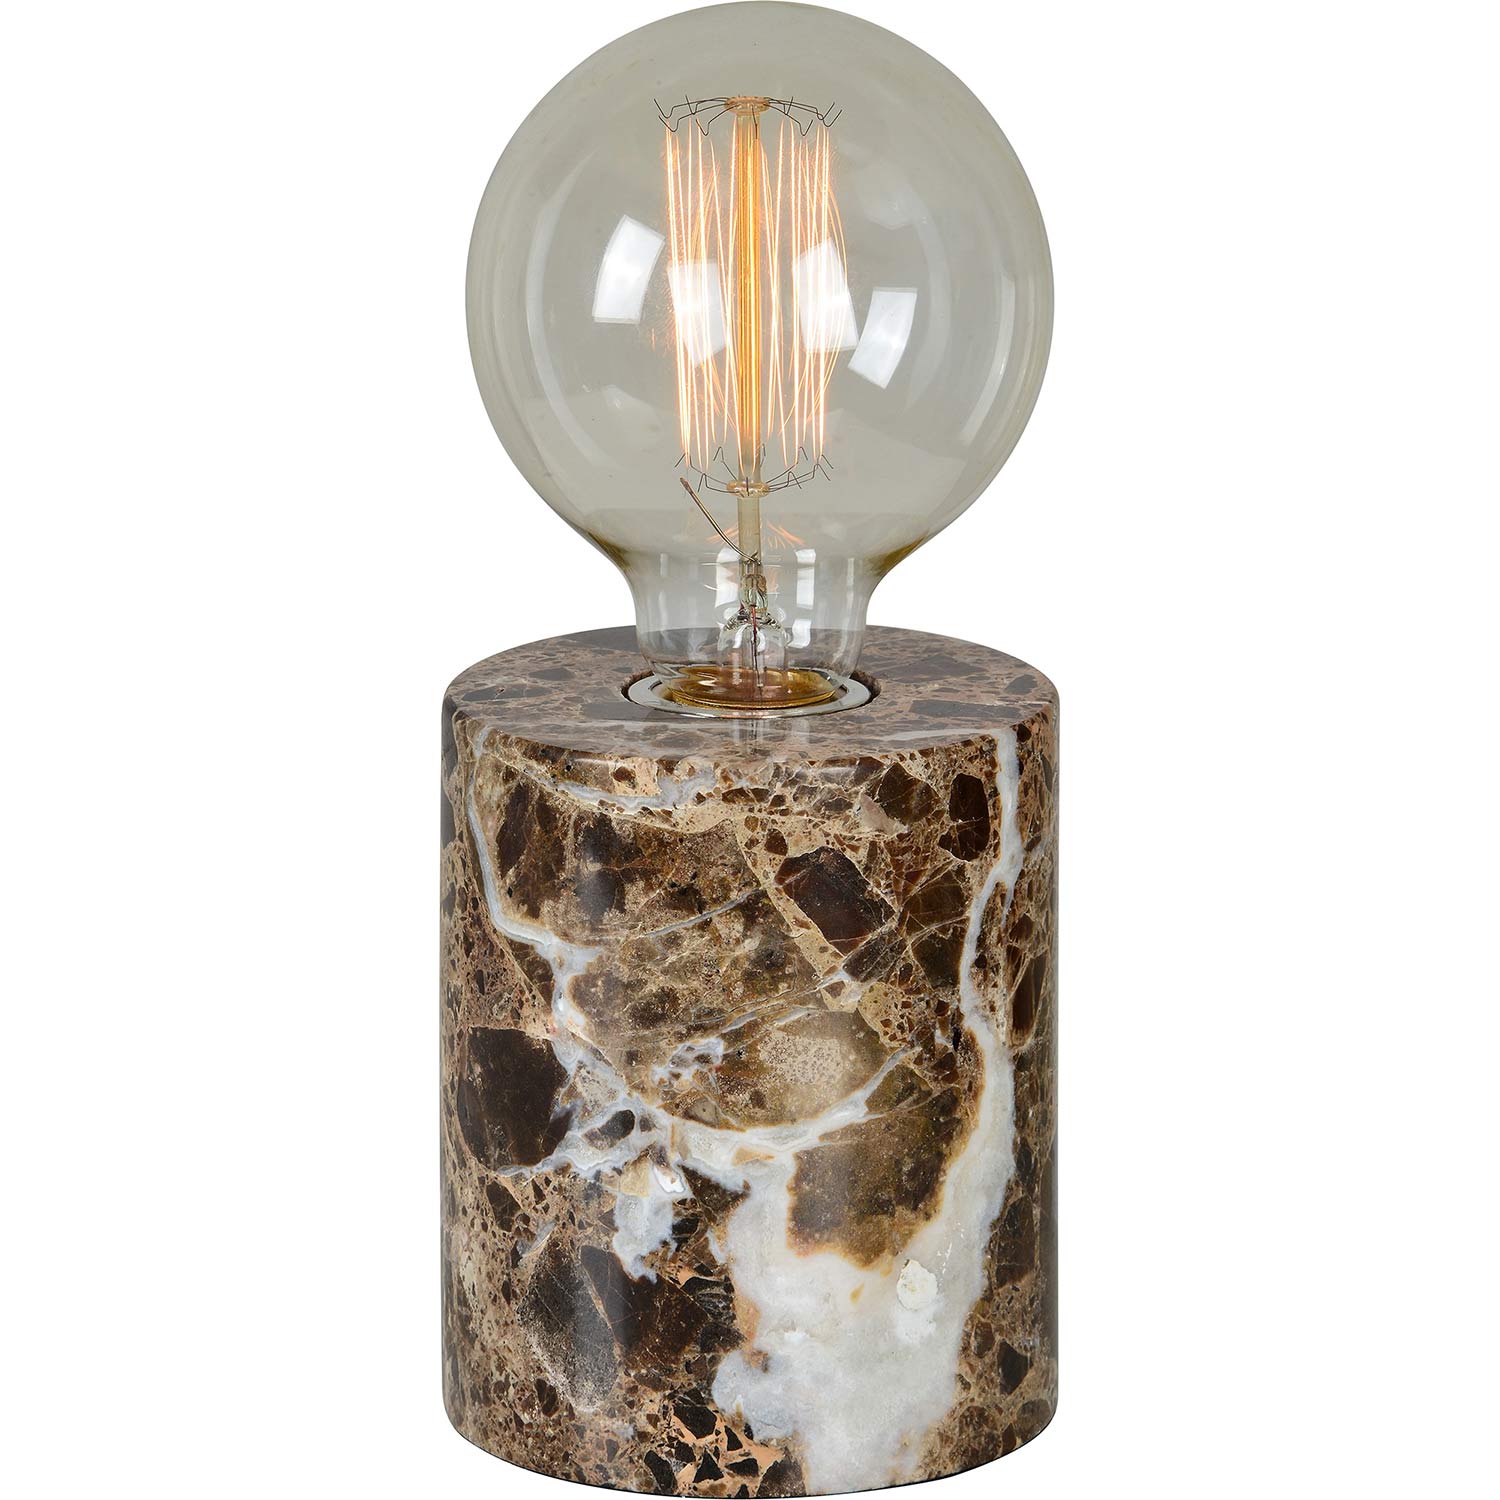 Ren-Wil Banstead Table Lamp - Brown Marble